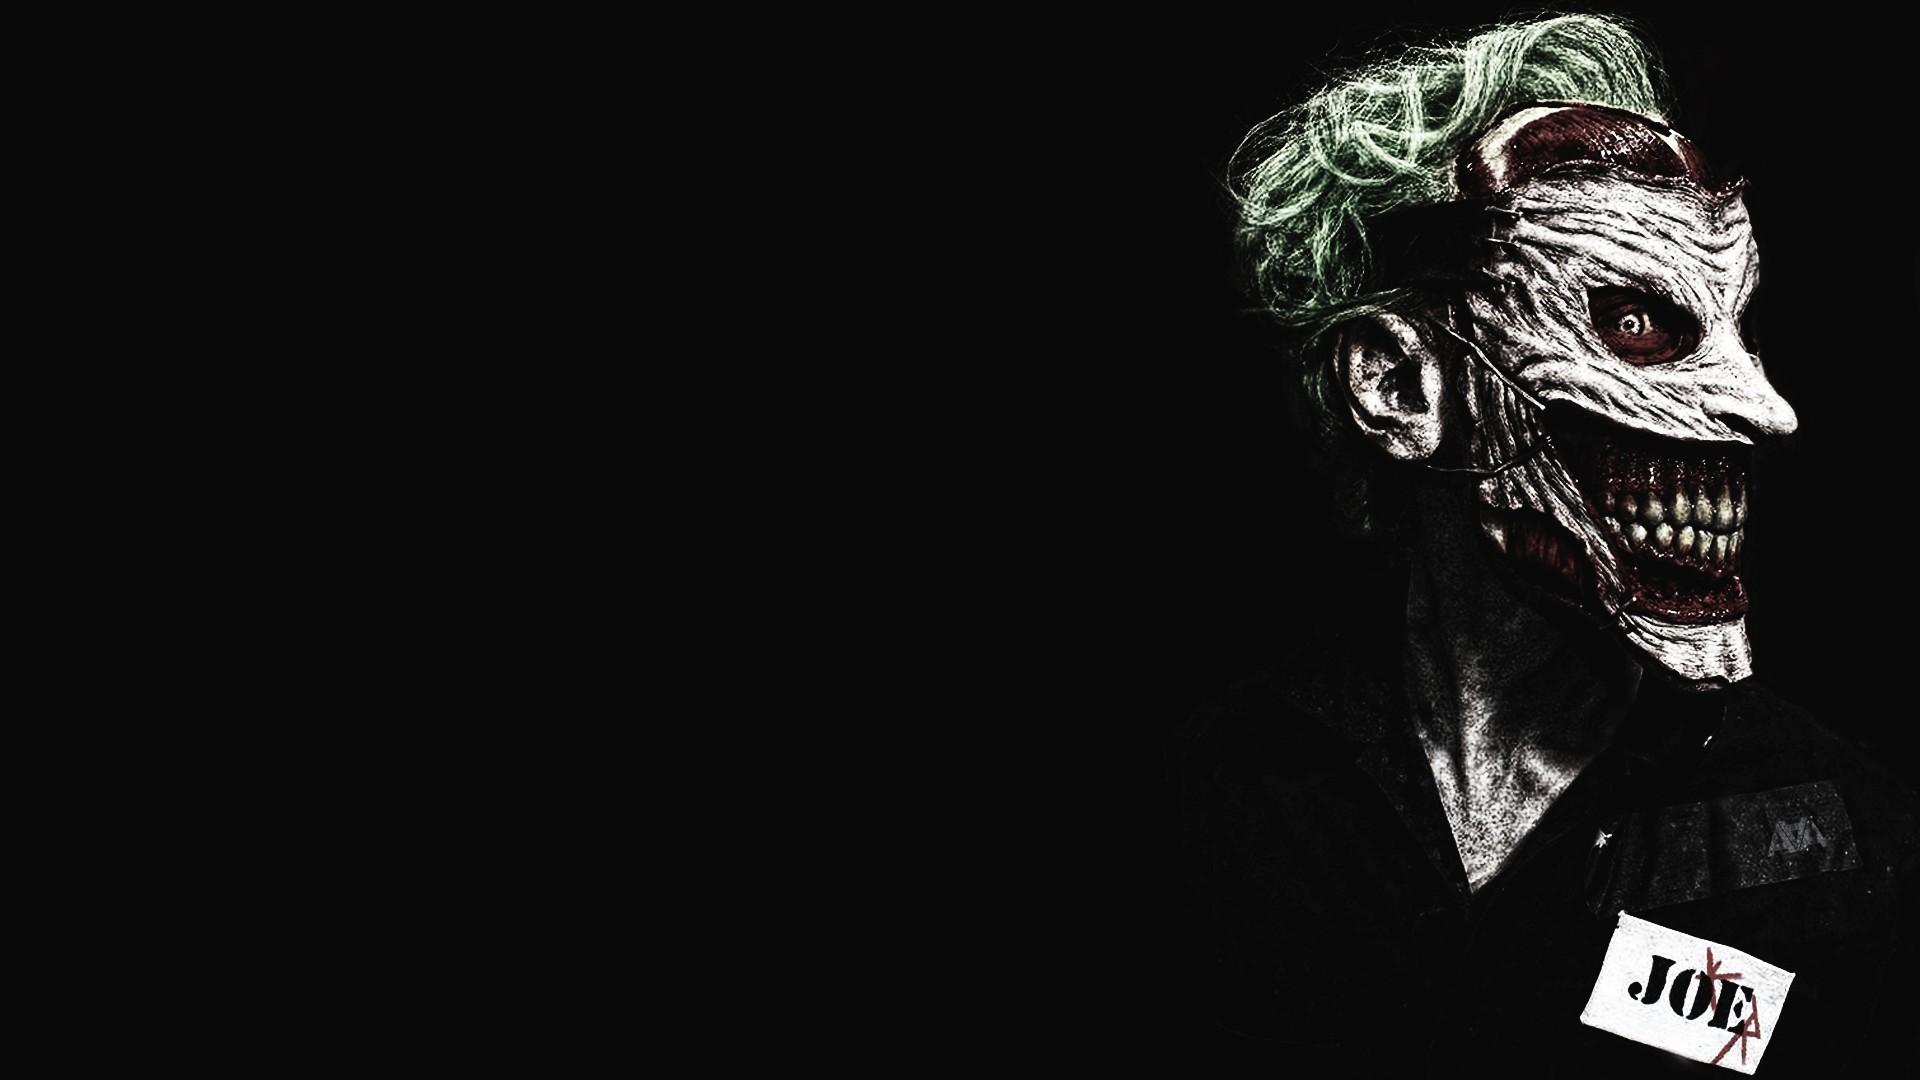 Heath Ledger Joker Wallpaper background picture